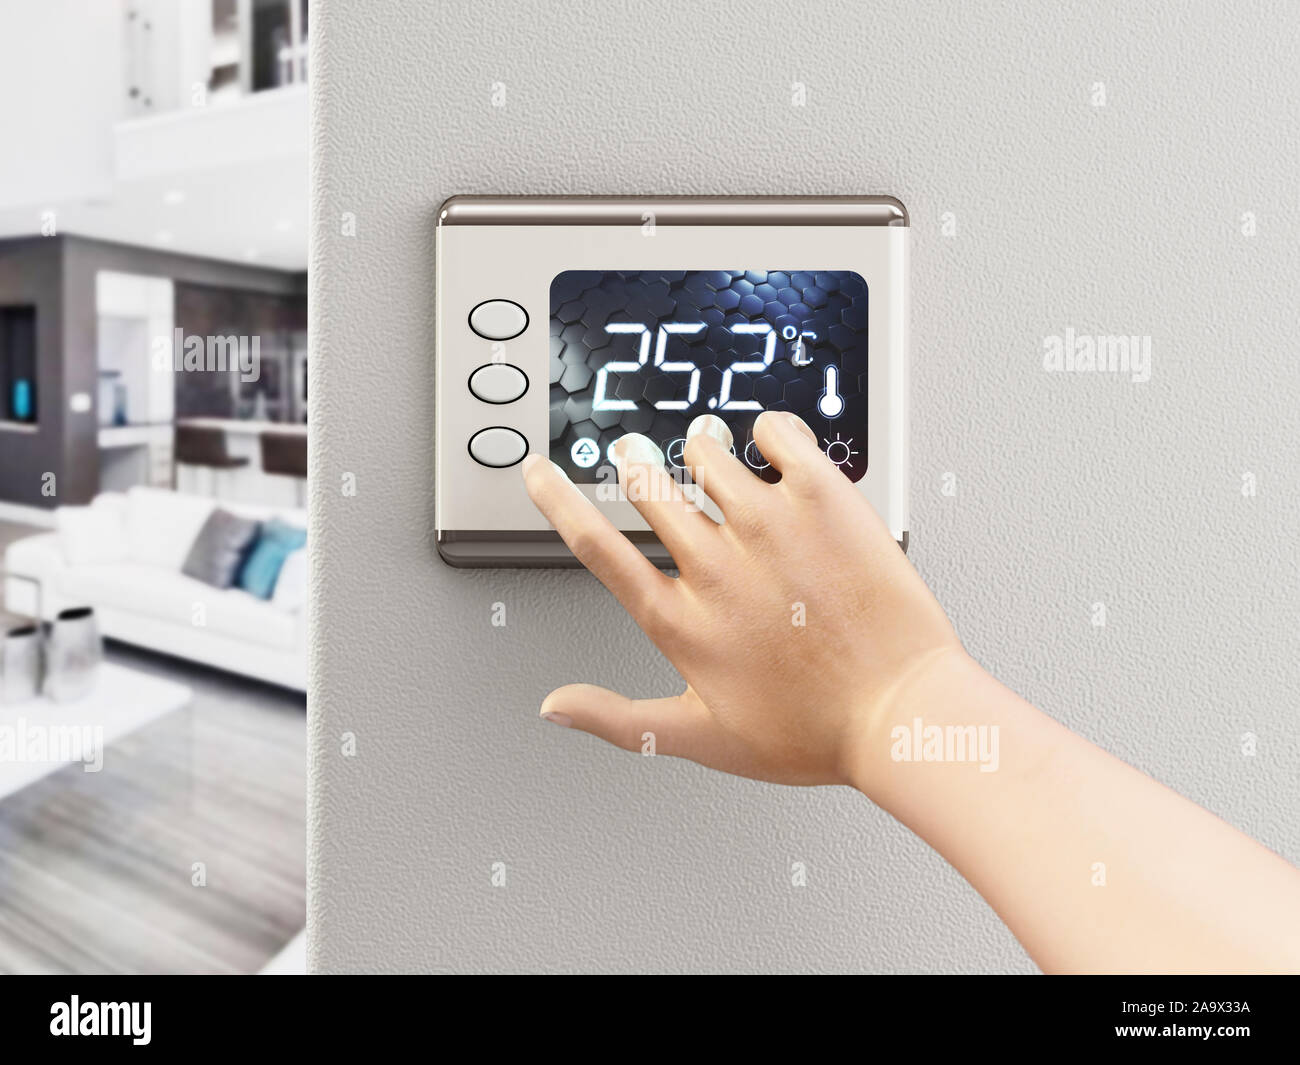 Hand adjusting room temperature using a digital thermostat screen. 3D illustration. Stock Photo